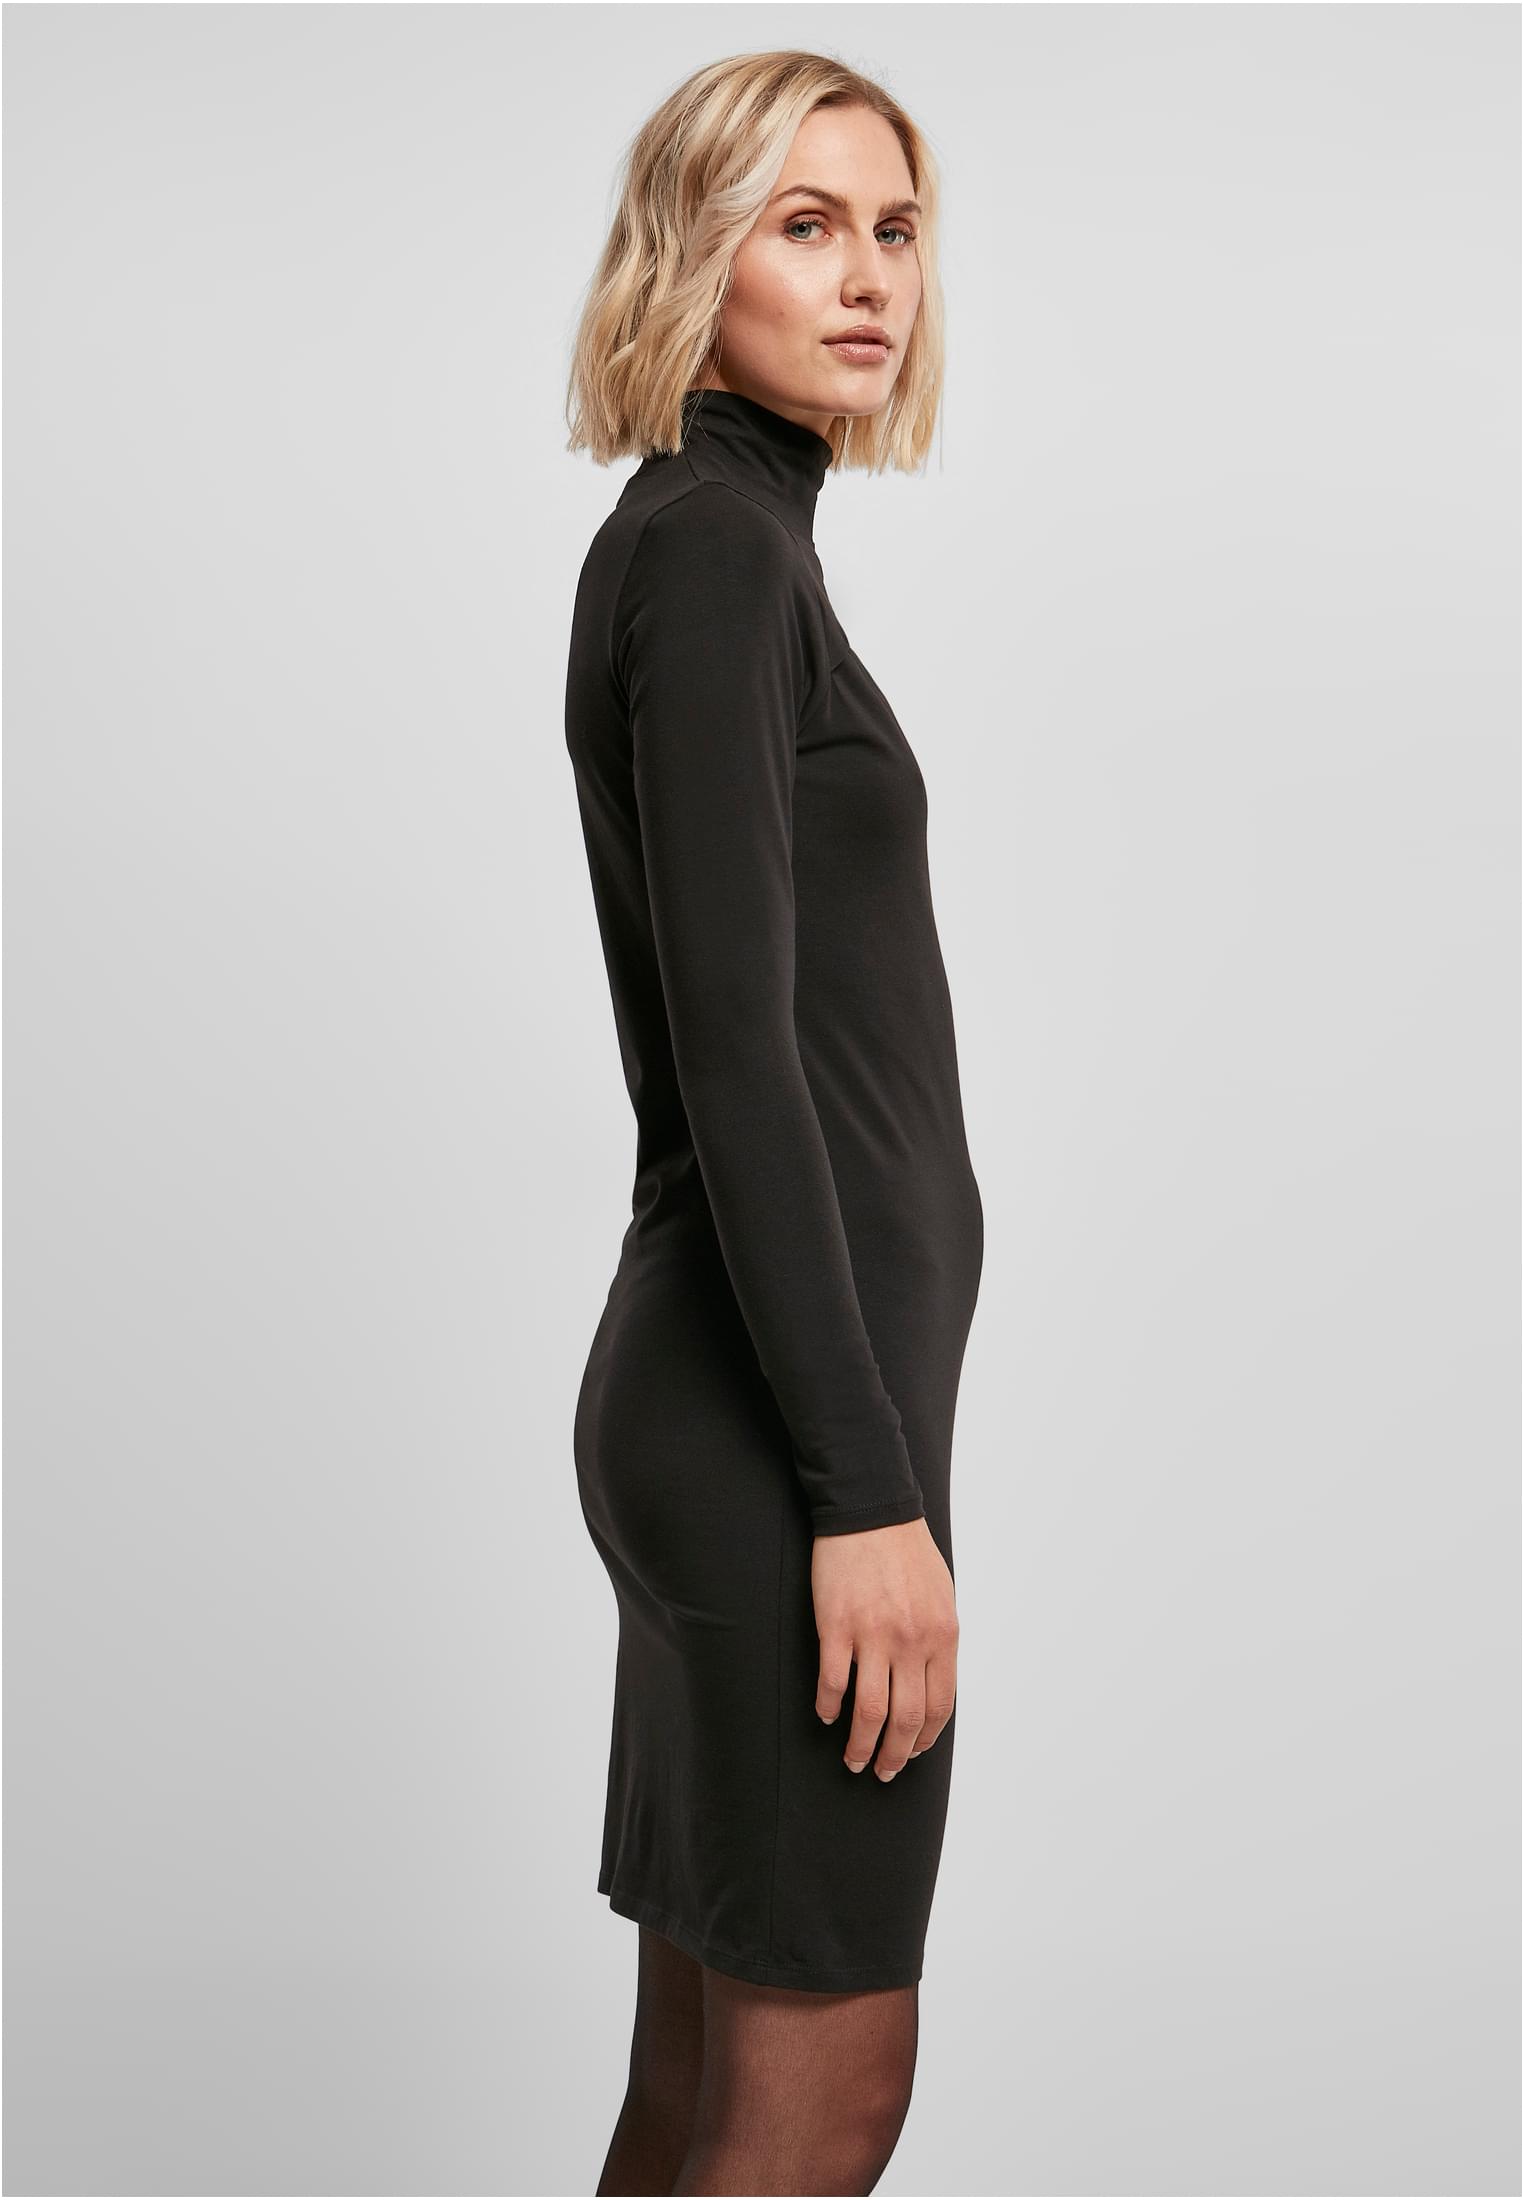 Kleider & R?cke Ladies Stretch Jersey Cut-Out Turtleneck Dress in Farbe black